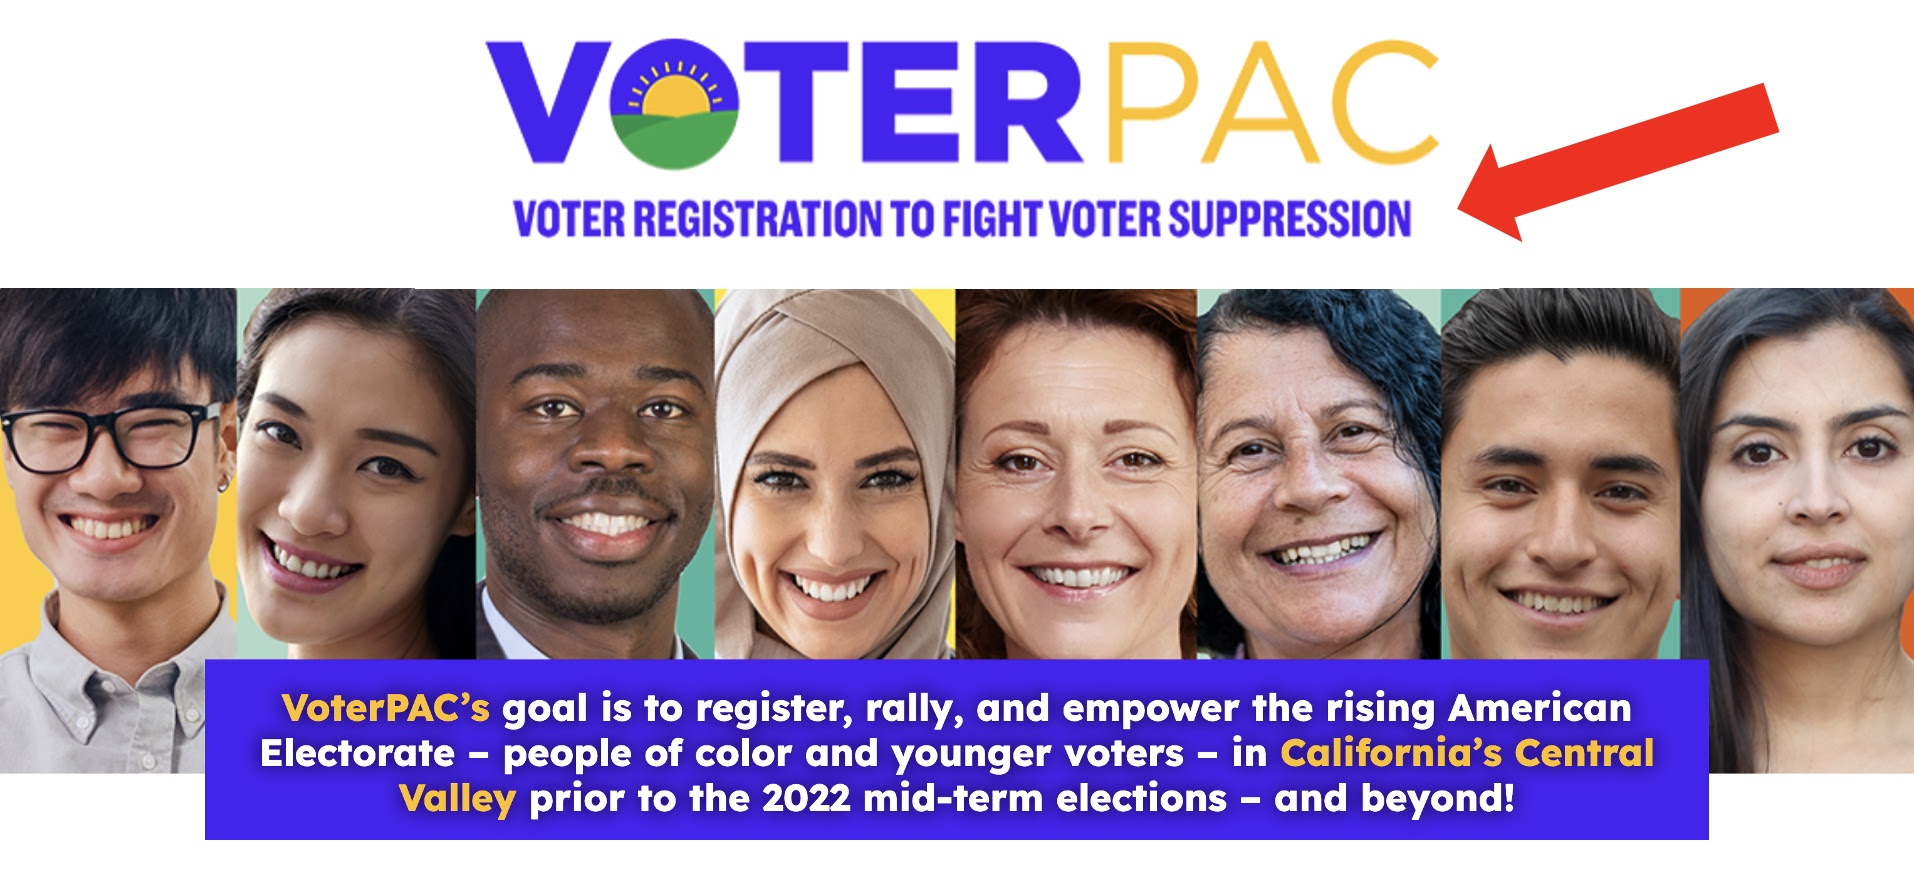 Voter PAC fights voter suppression with voter registration